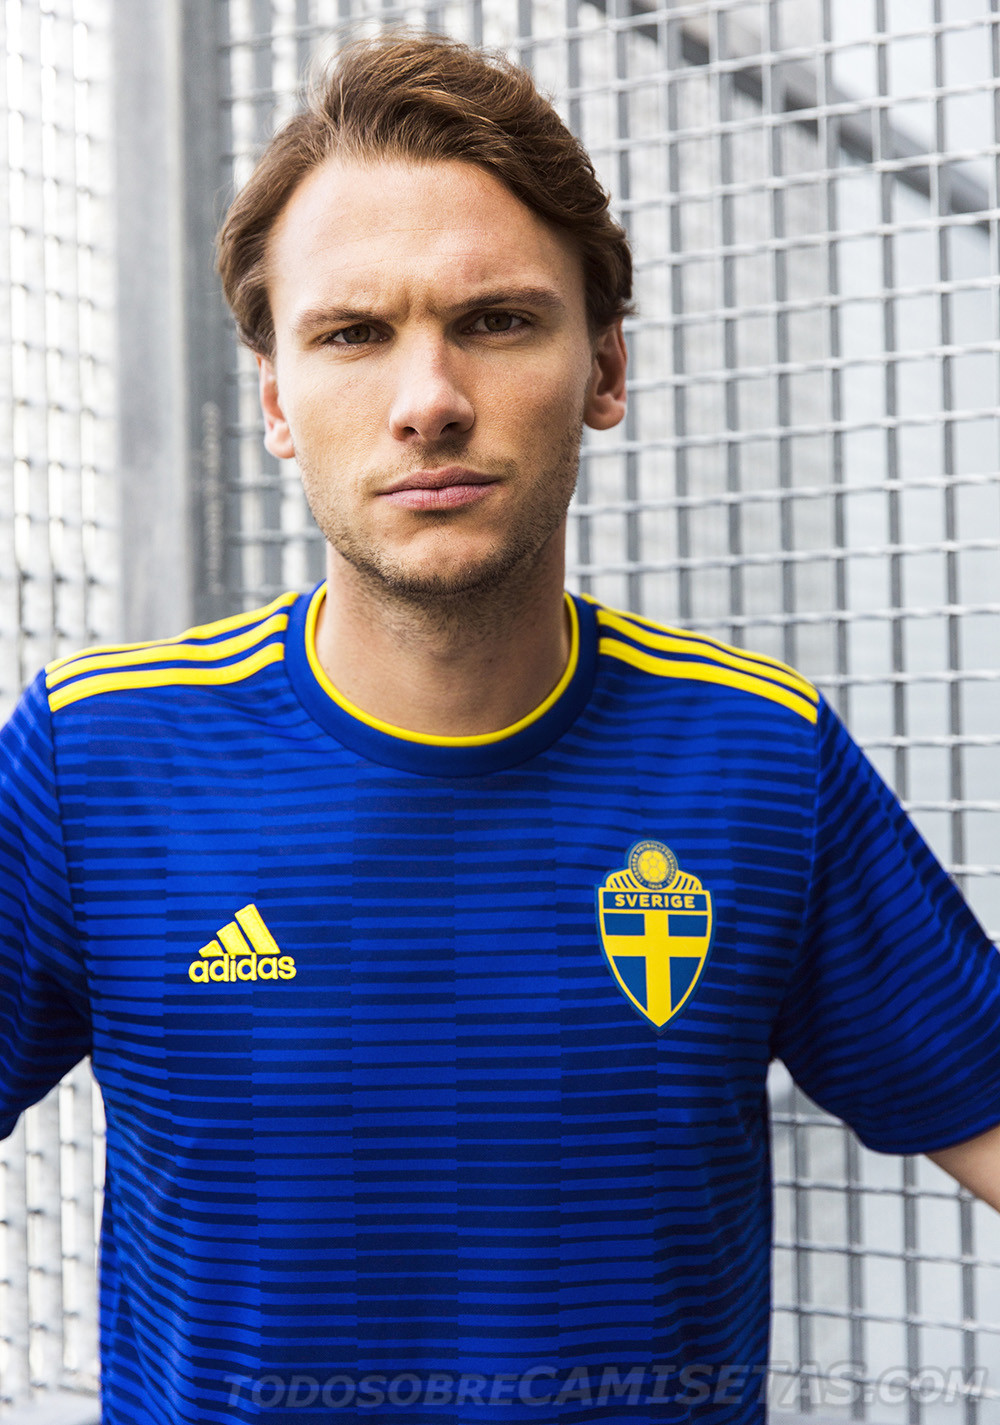 Sweden 2018 World Cup adidas Away Kit